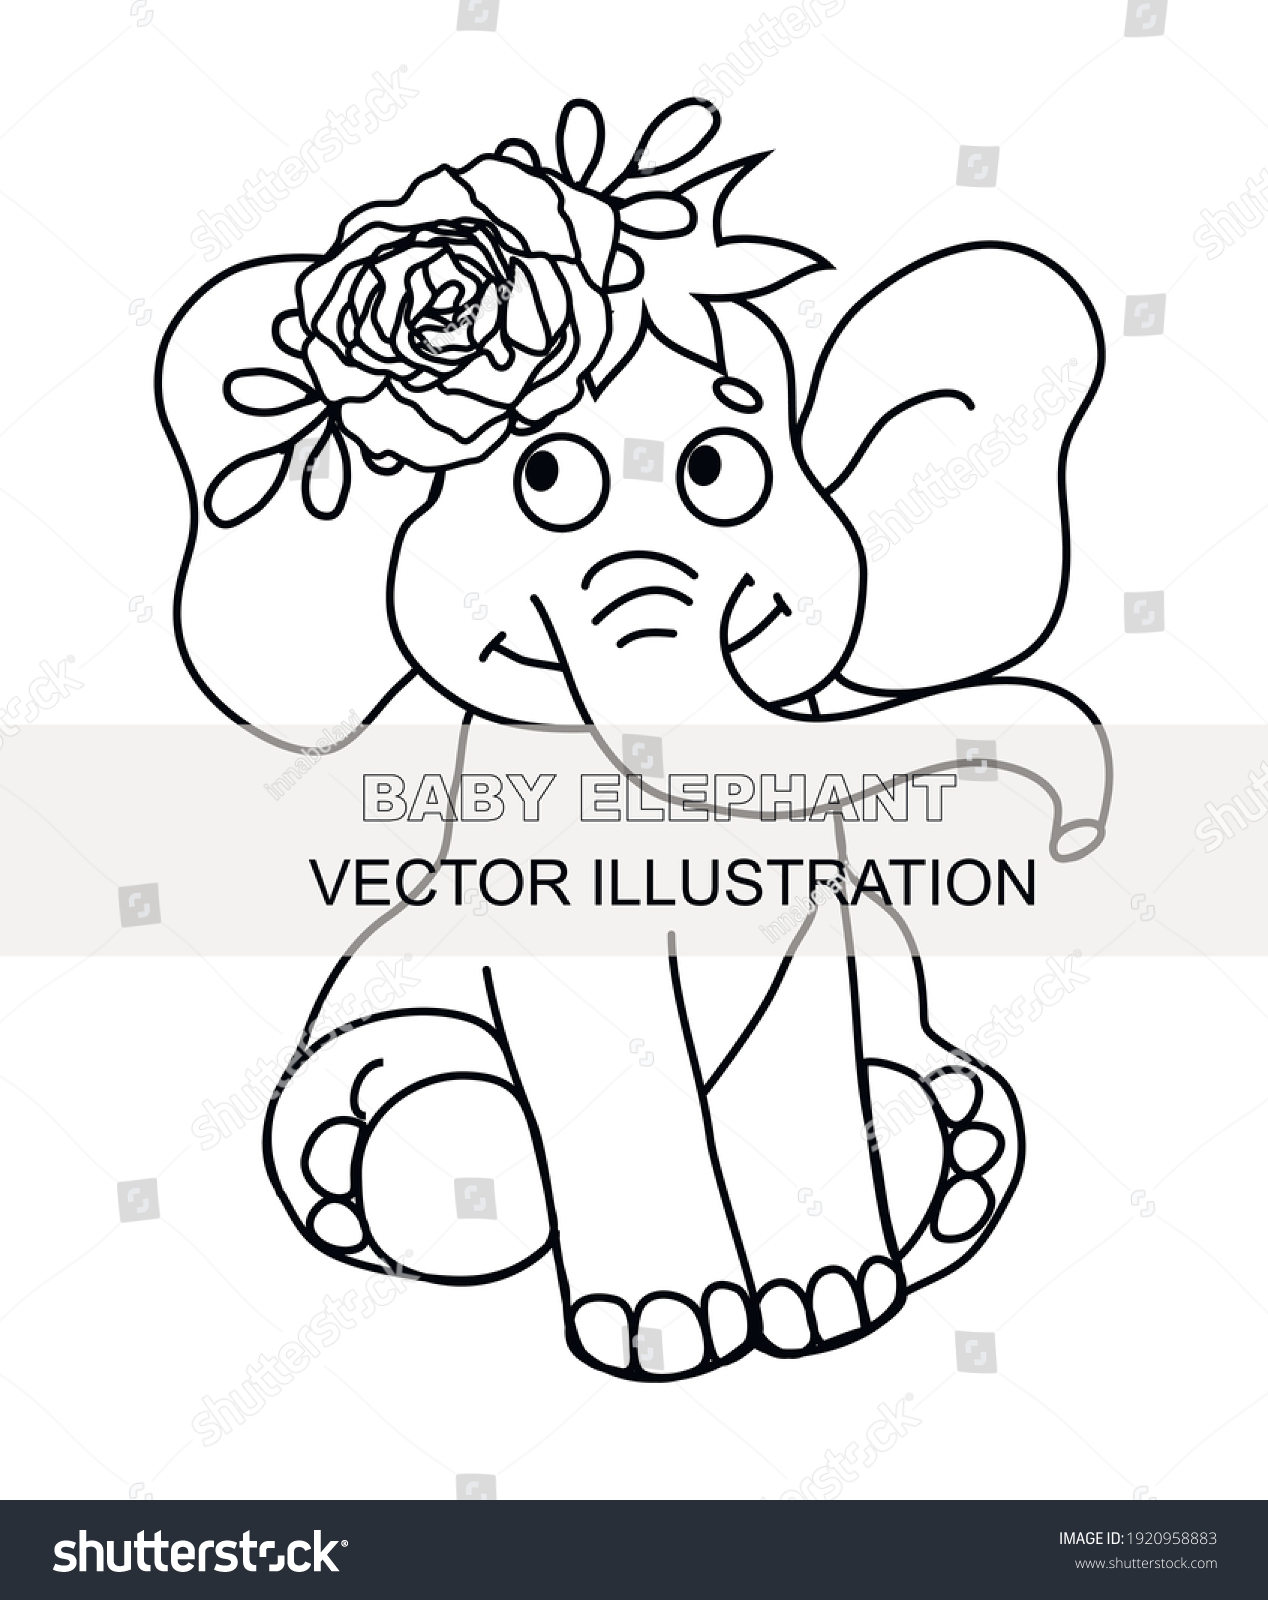 SVG of Baby Elephant with flower svg. Elephant with rose. Elephant with flower on Head. Linear vector illustration with elephant. svg